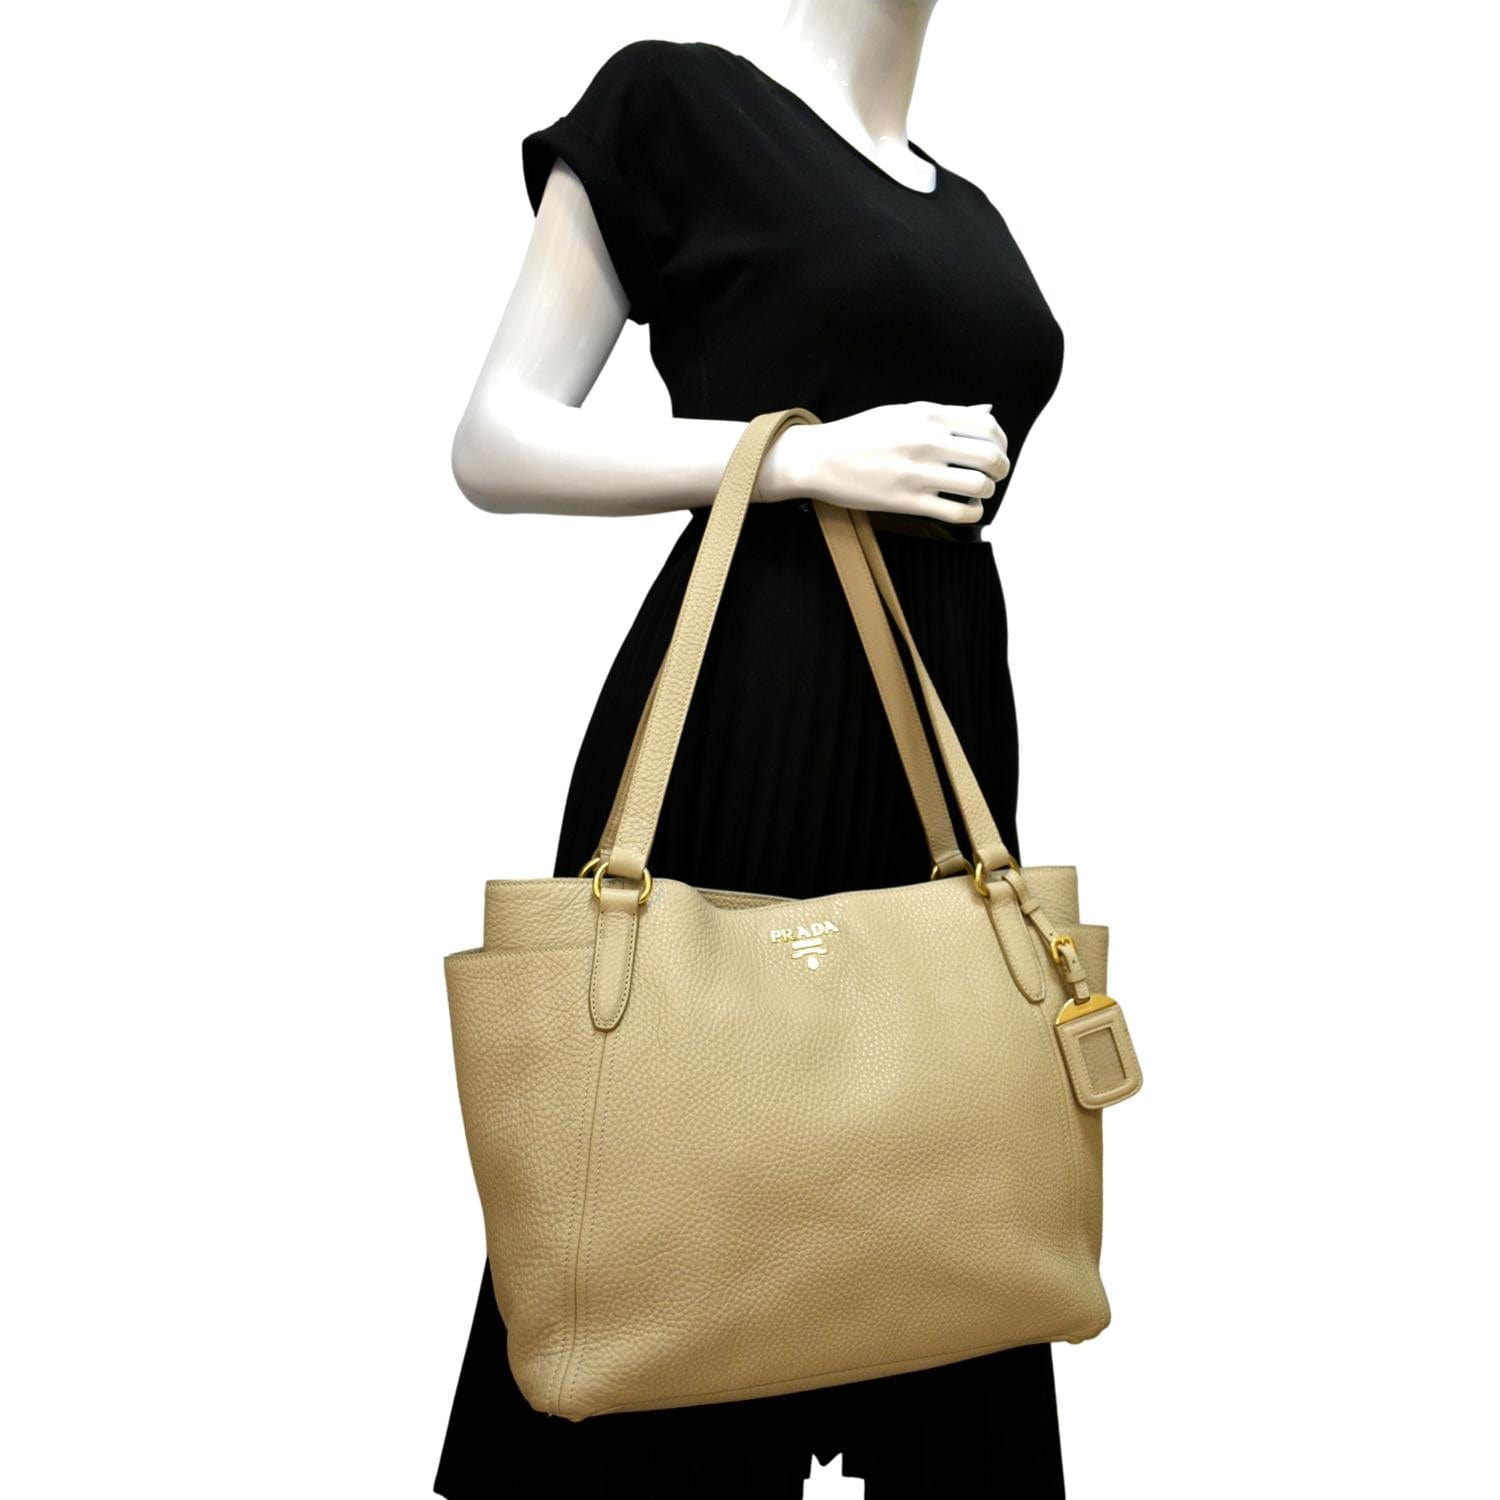  DAENO Womens Purses and Handbags Large Tote Bags for